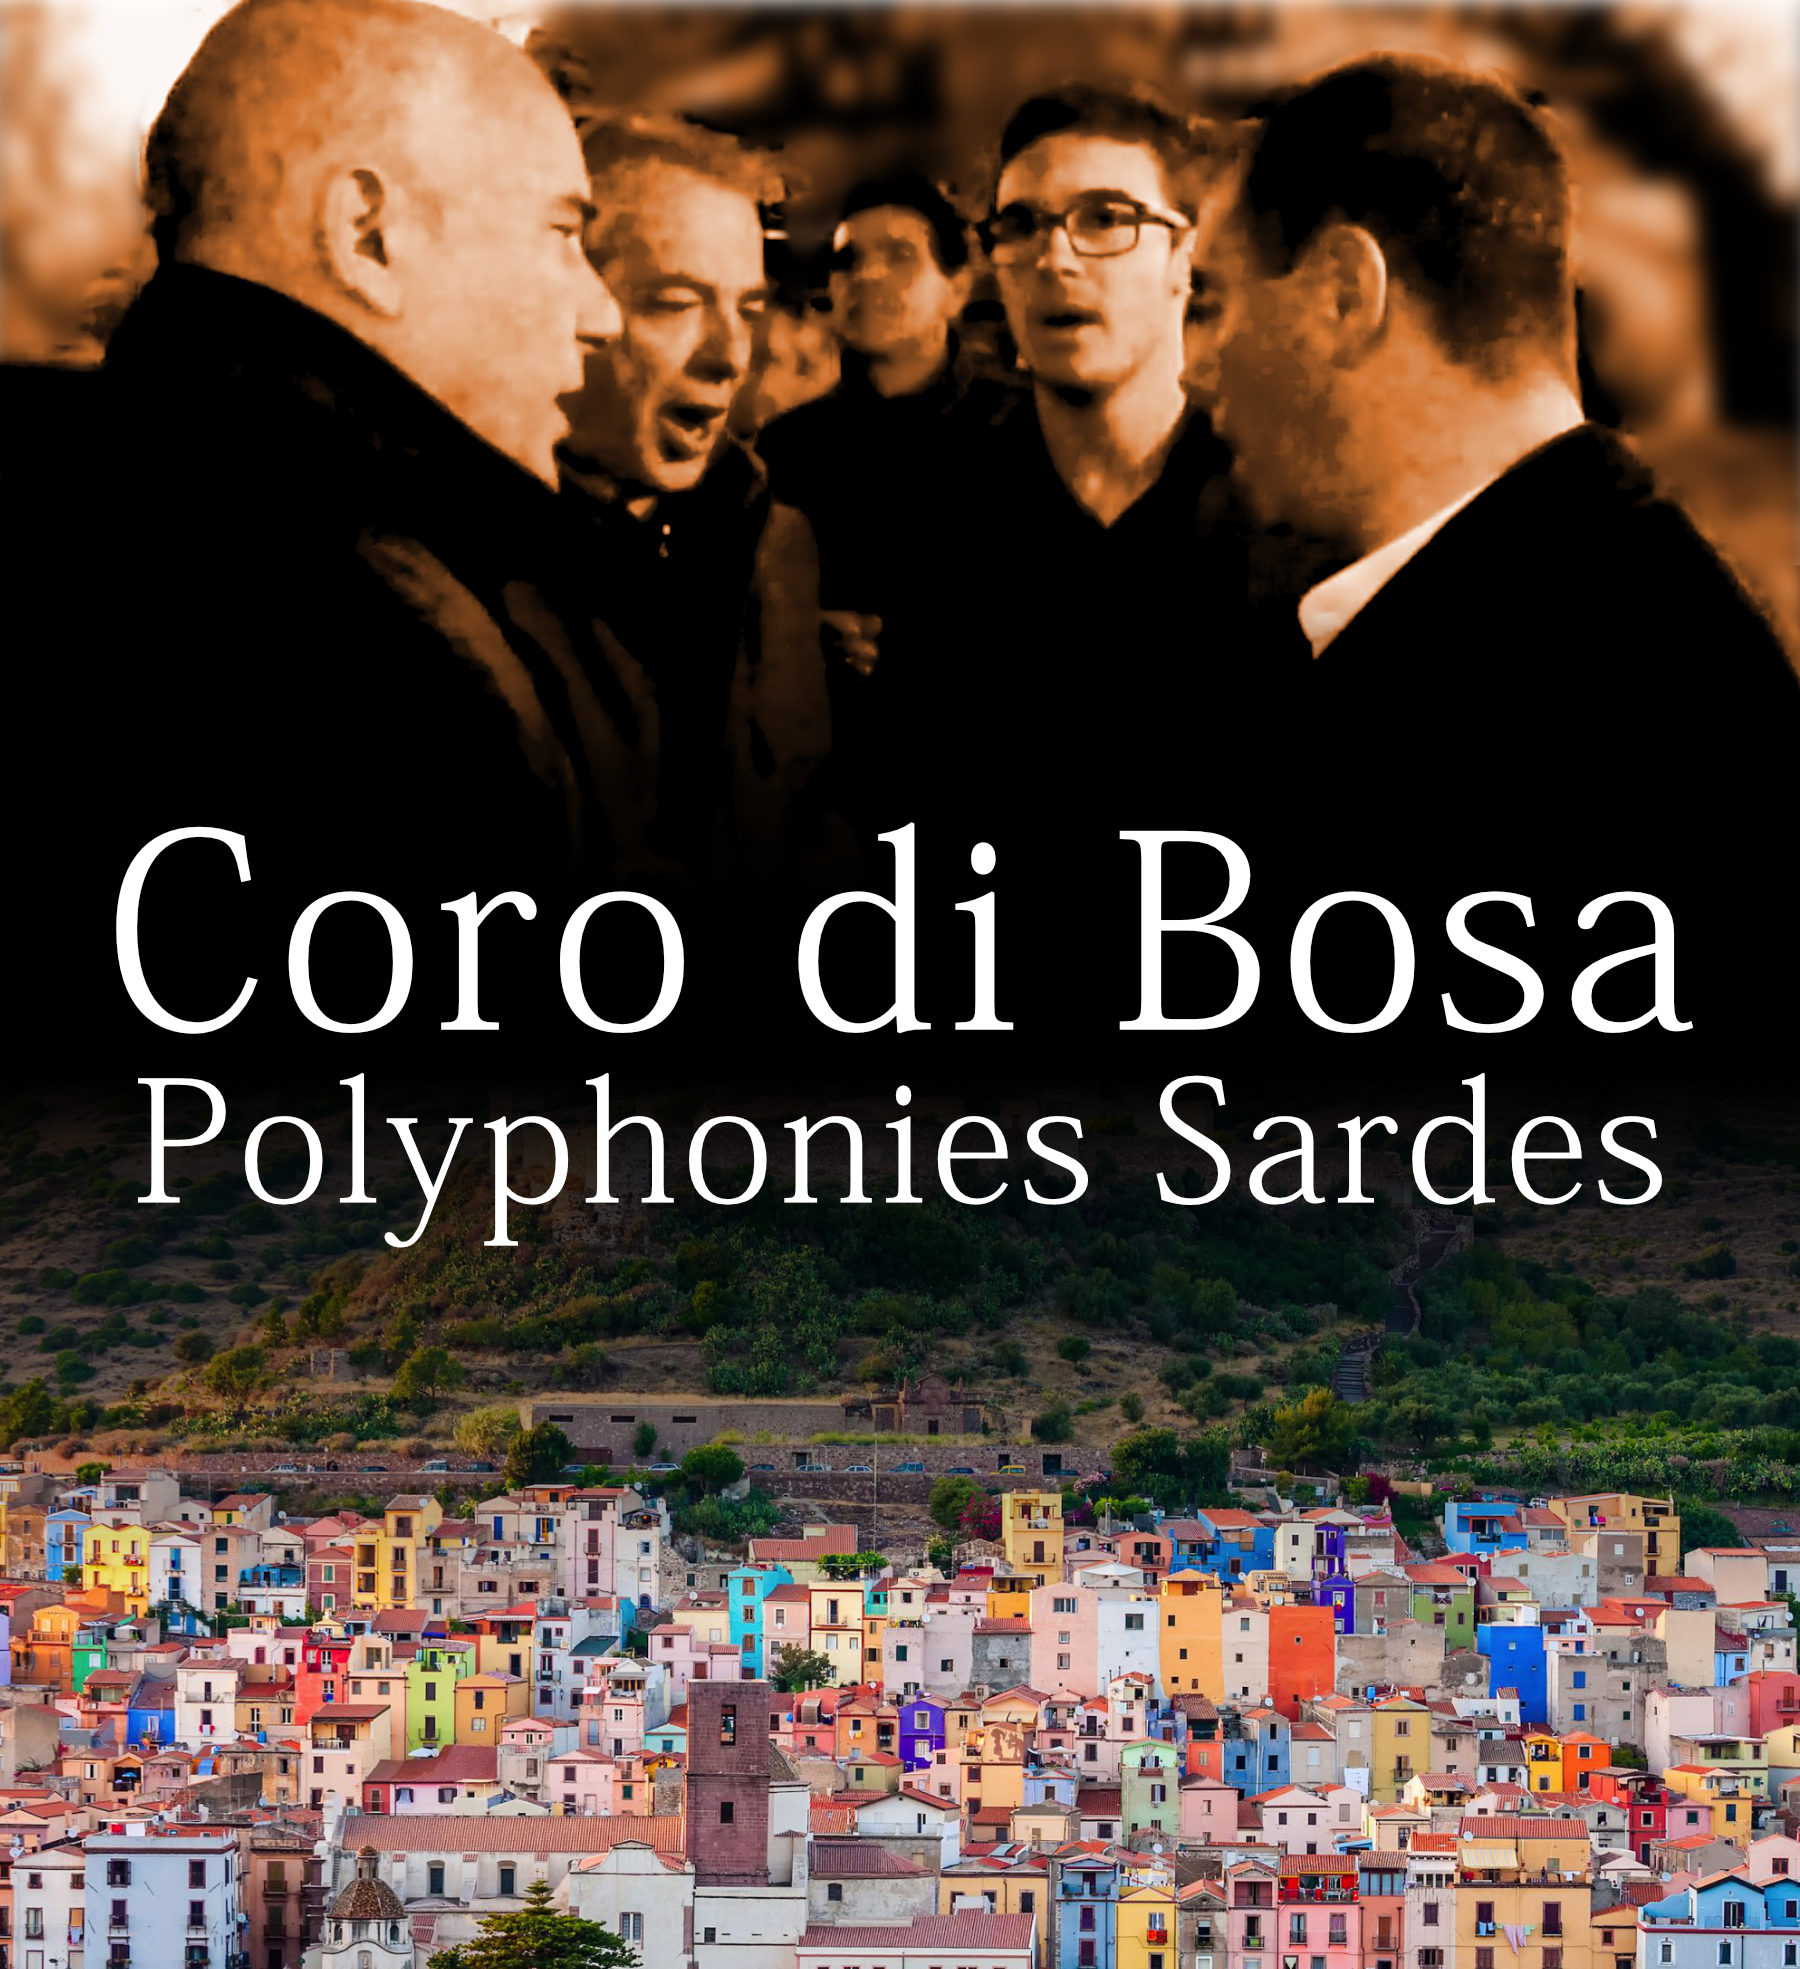 CONCERT CORO DI BOSA - Polyphonies sardes